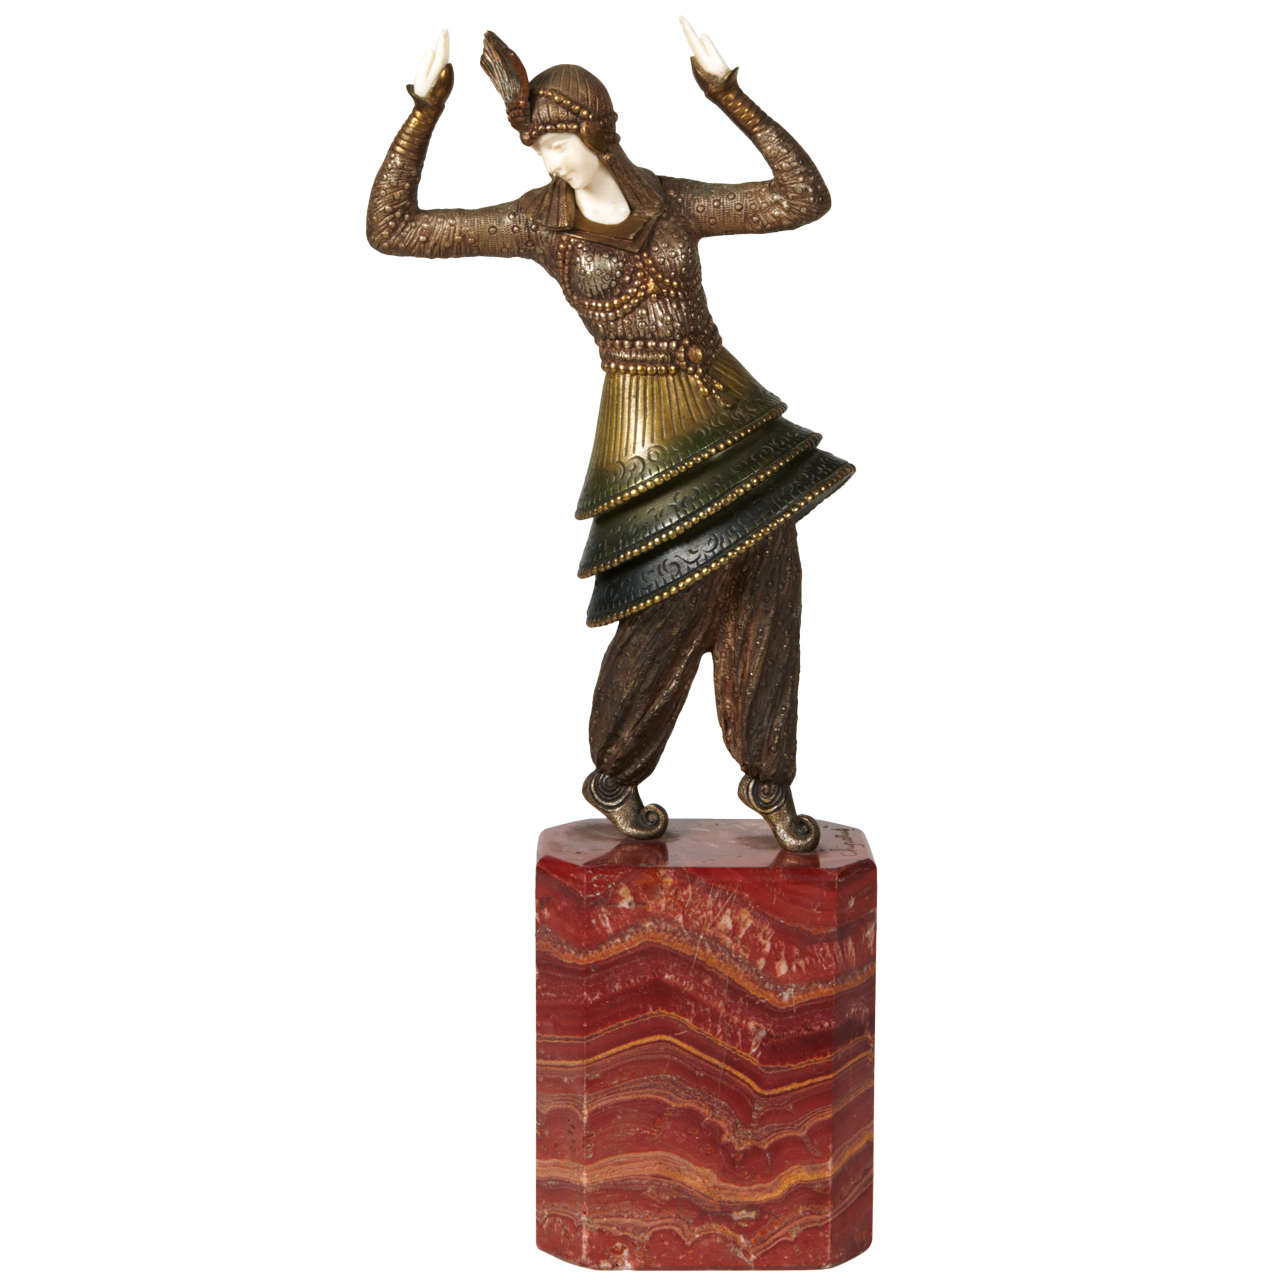 1925 Demetre Chiparus Bronze and Ivory Sculpture, "Pantaloons"